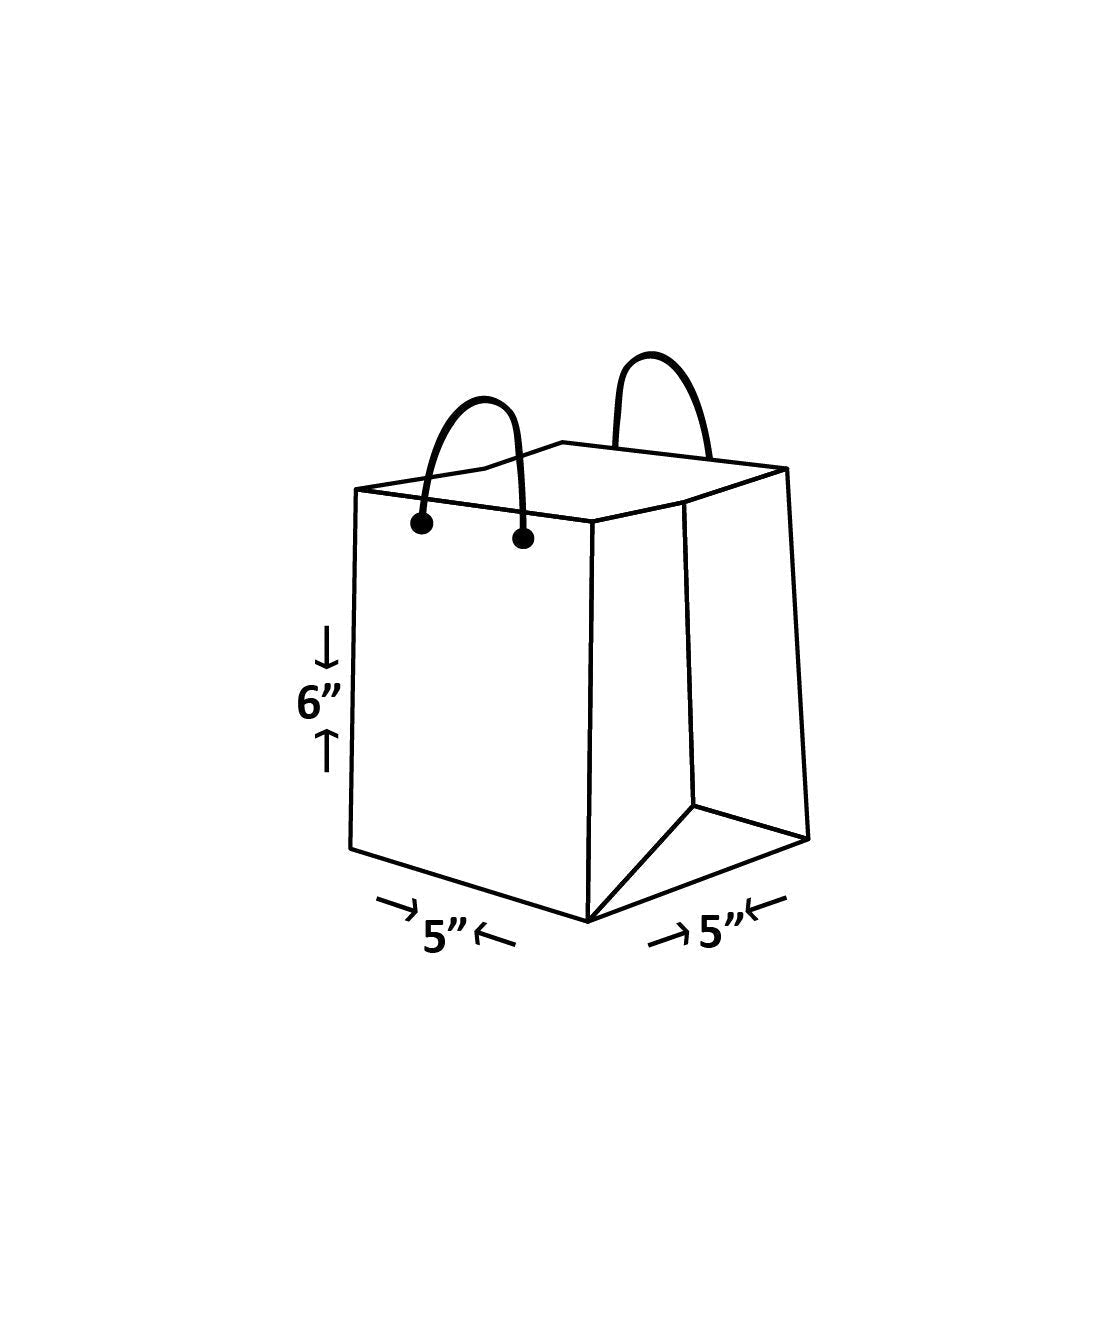 Peacock Feather Design Bag - Red Square Bag Multipurpose Packaging - 5x5 Paper Bag